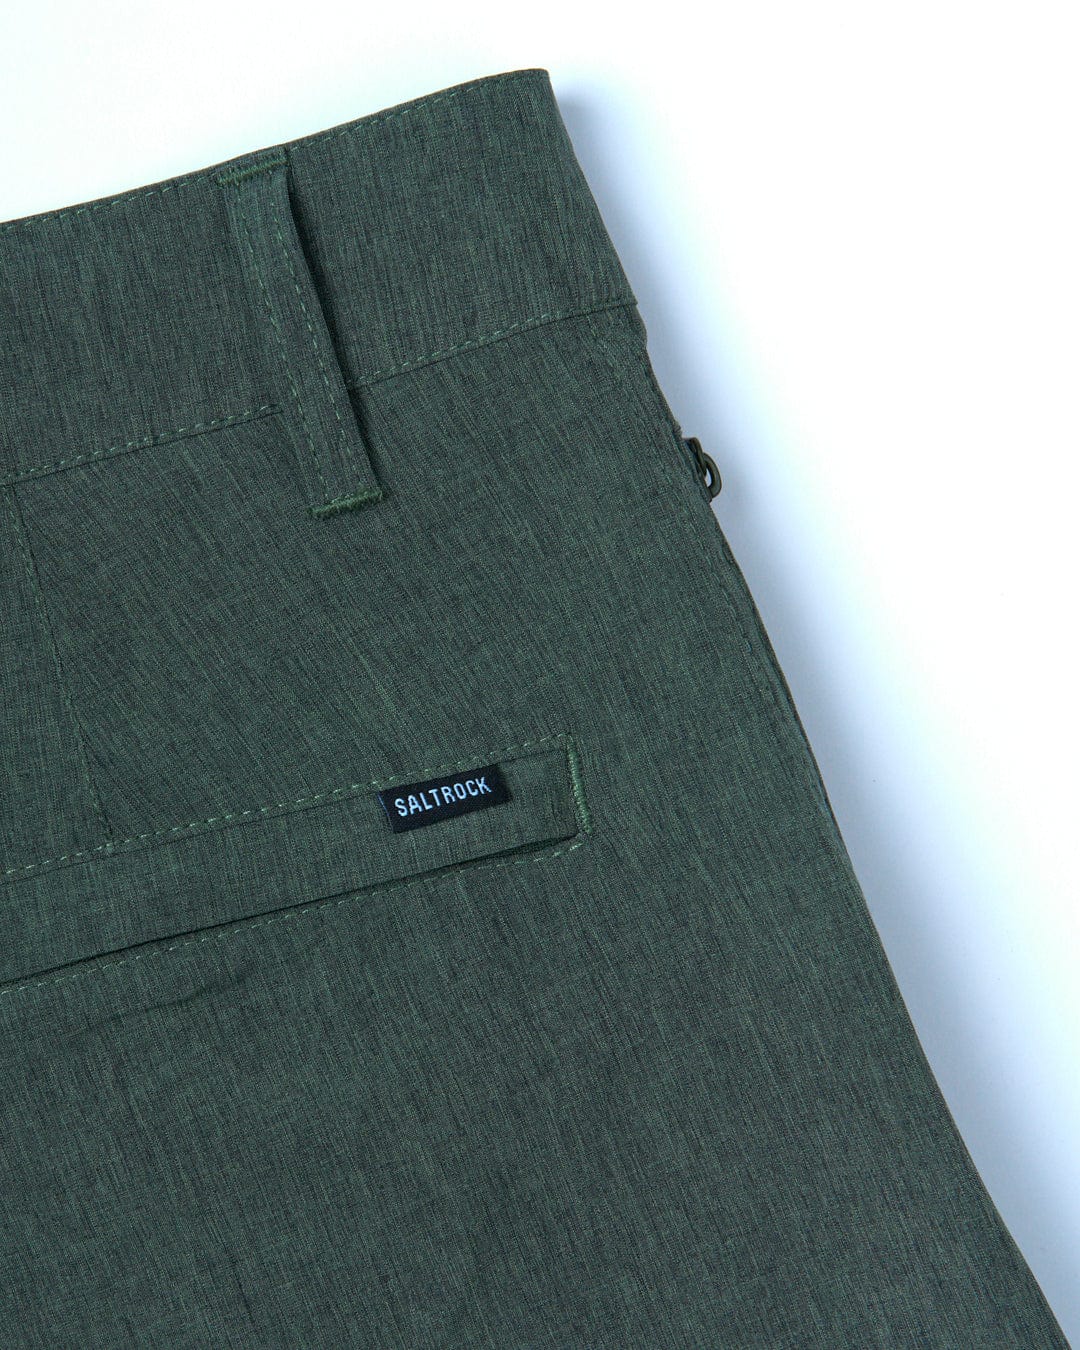 The back pocket of Saltrock's Amphibian 2 - Mens Hybrid Boardshorts - Dark Green with belt loops.